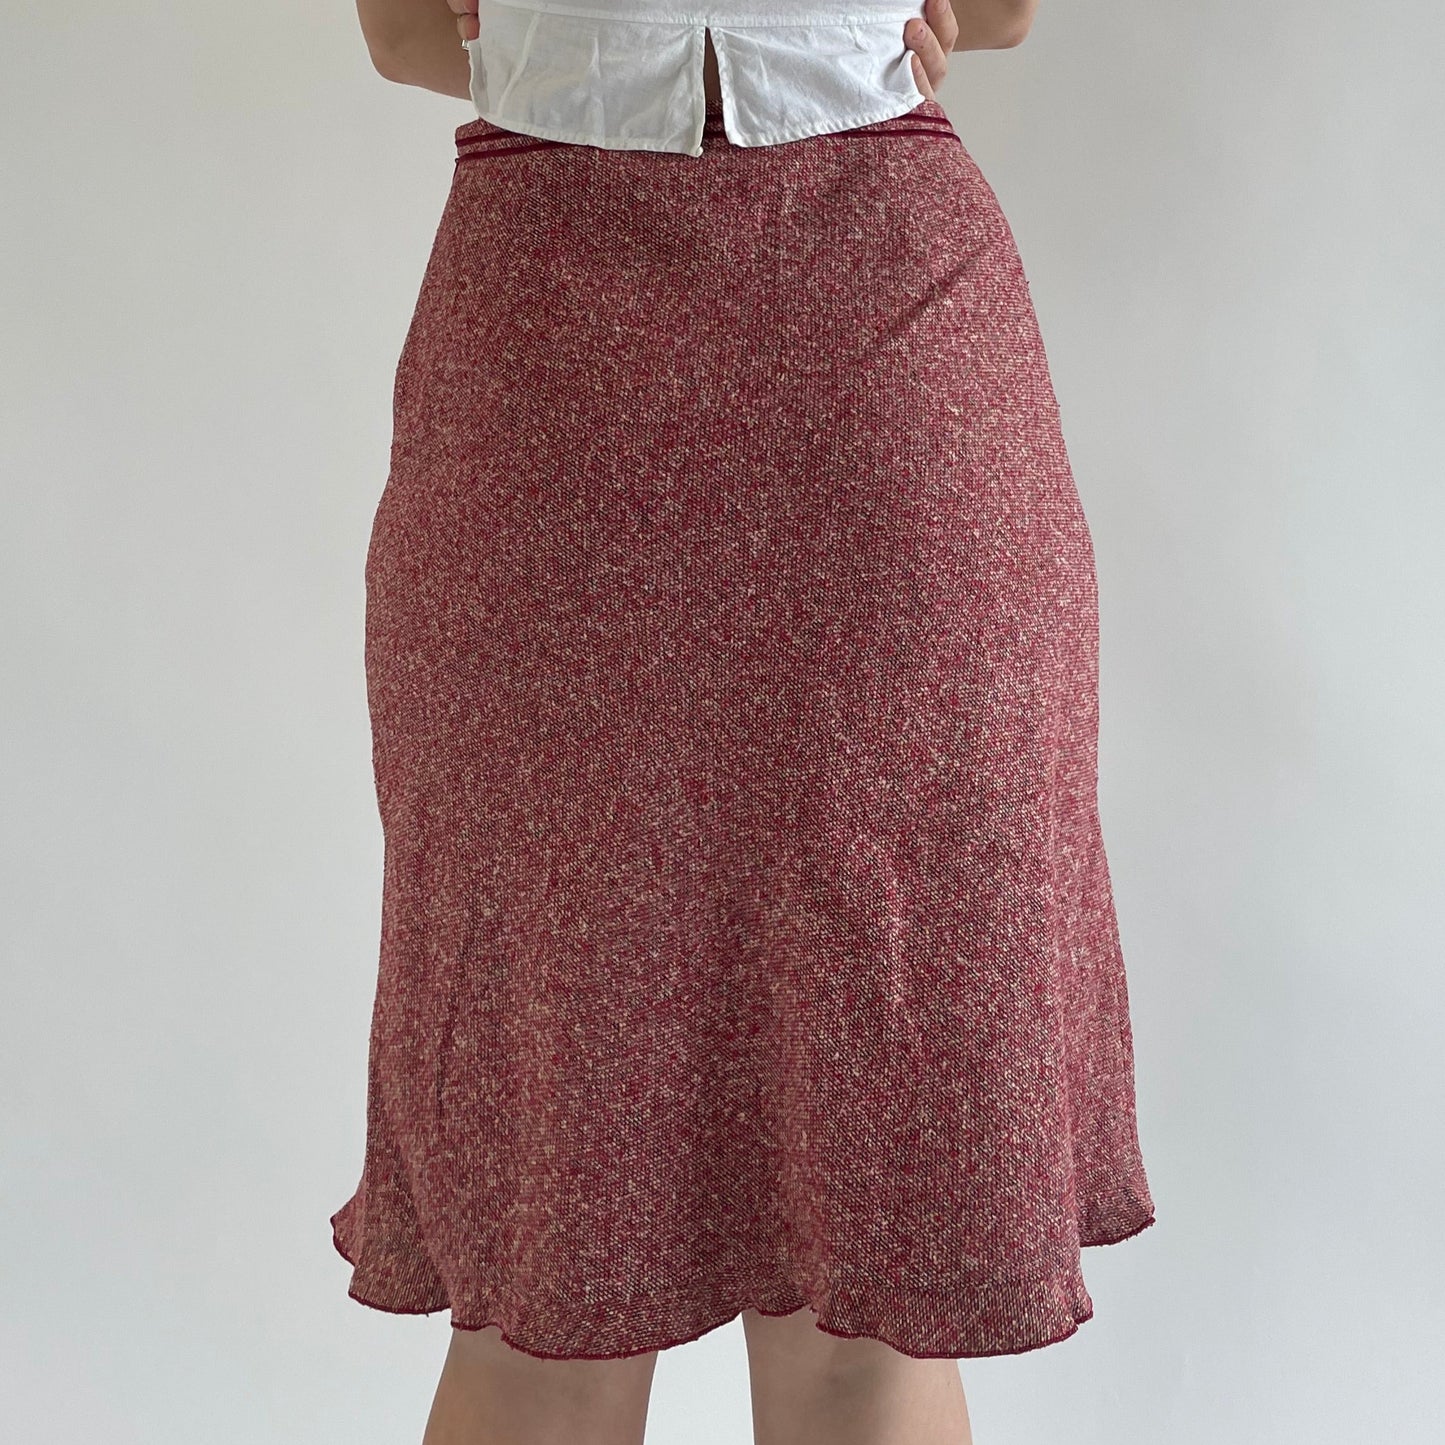 burberry bow skirt